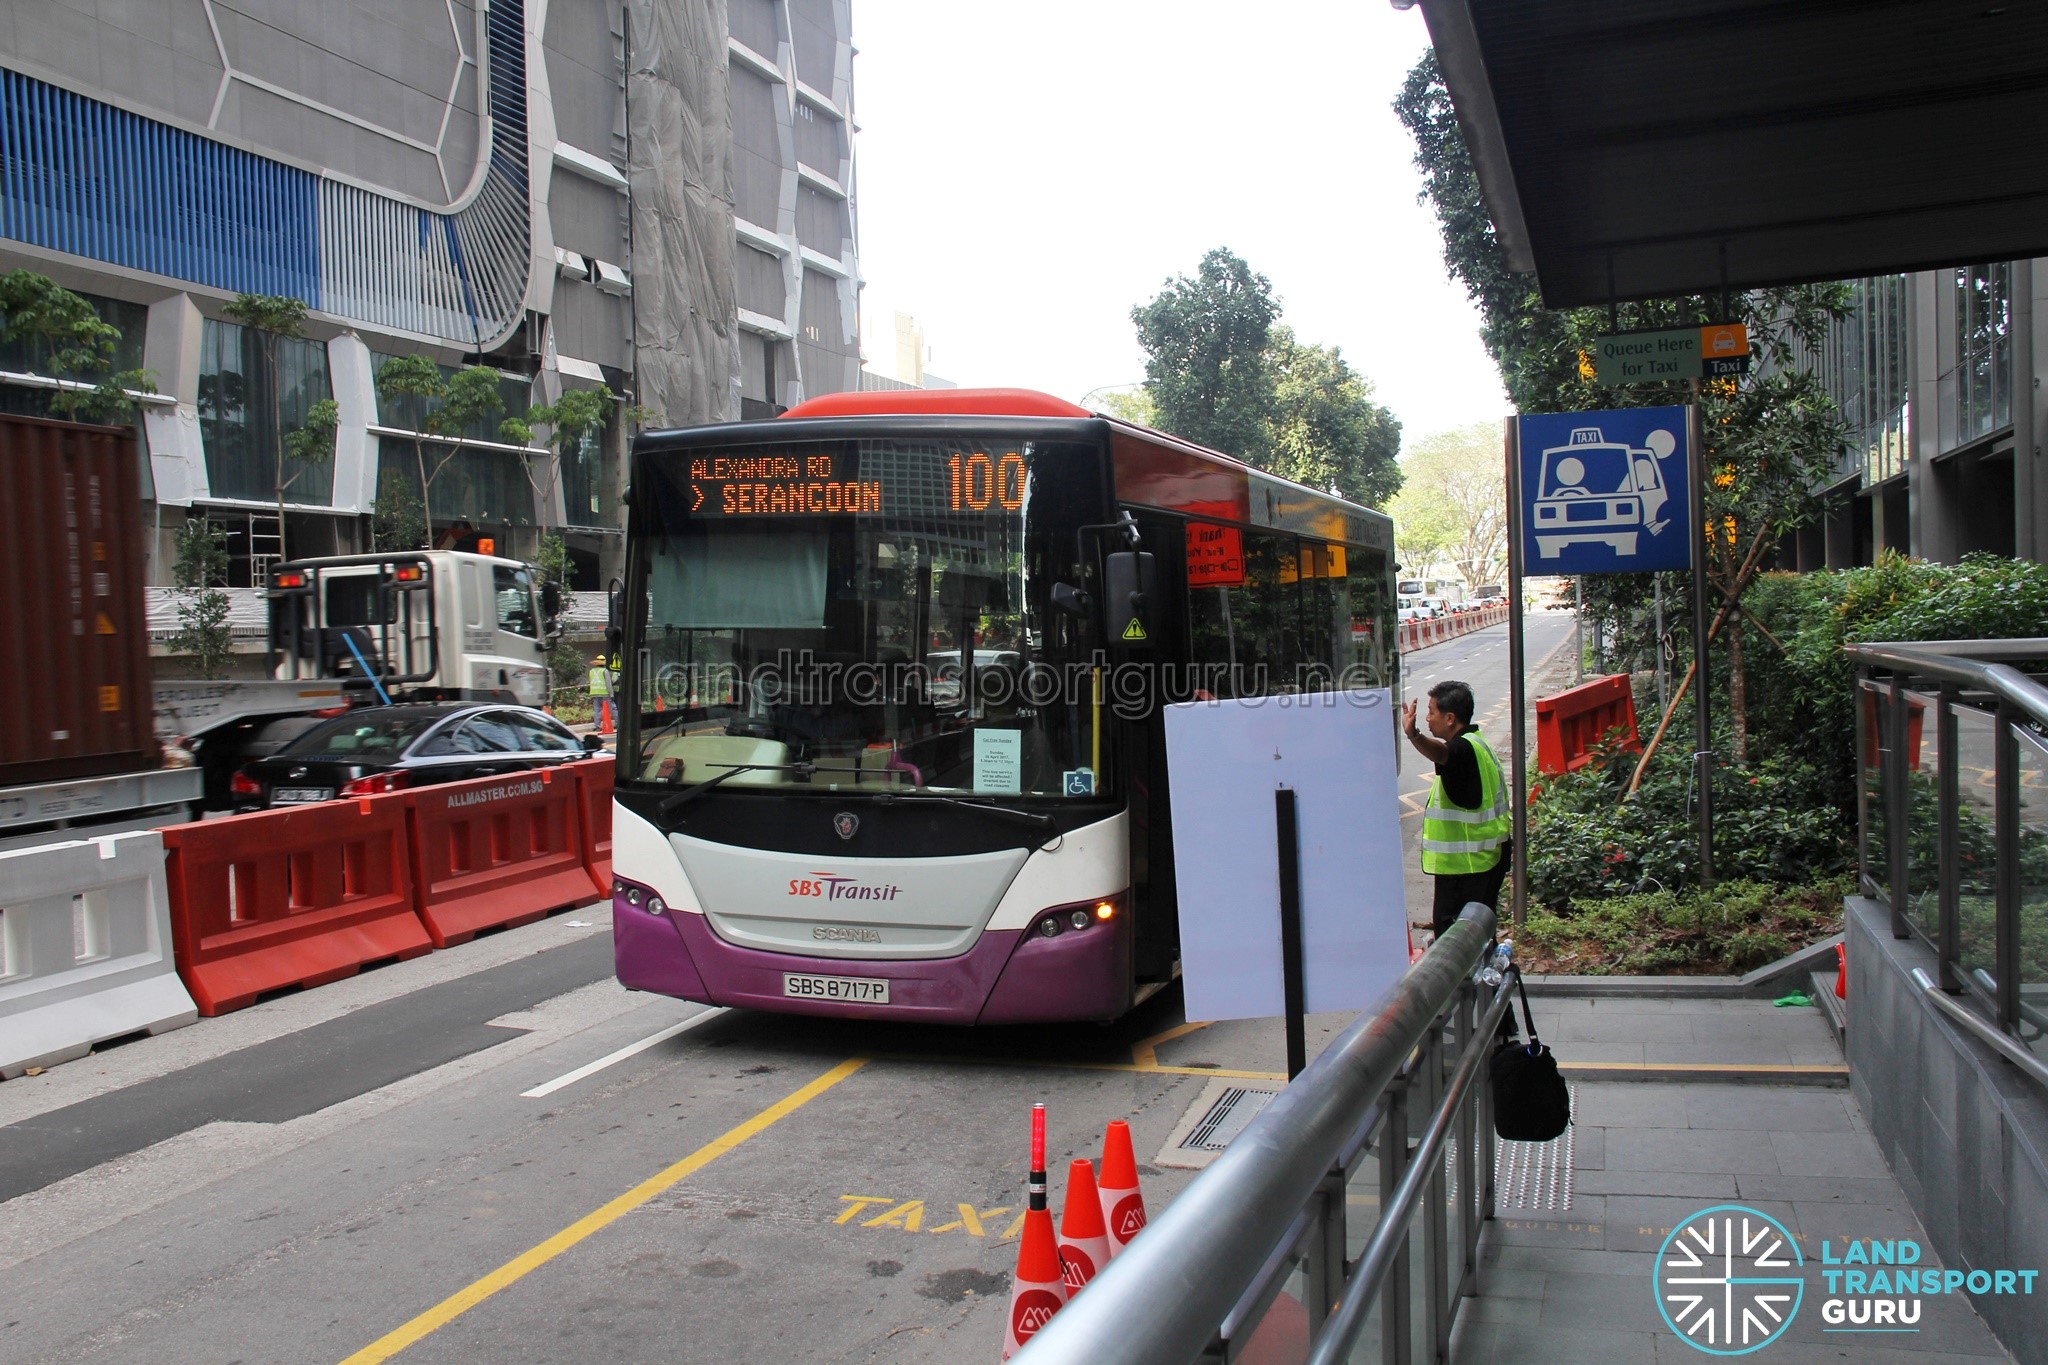 Bus Service 100 calling at the Temporary Bus Stop along Shenton Way during Car-Free Sunday SG